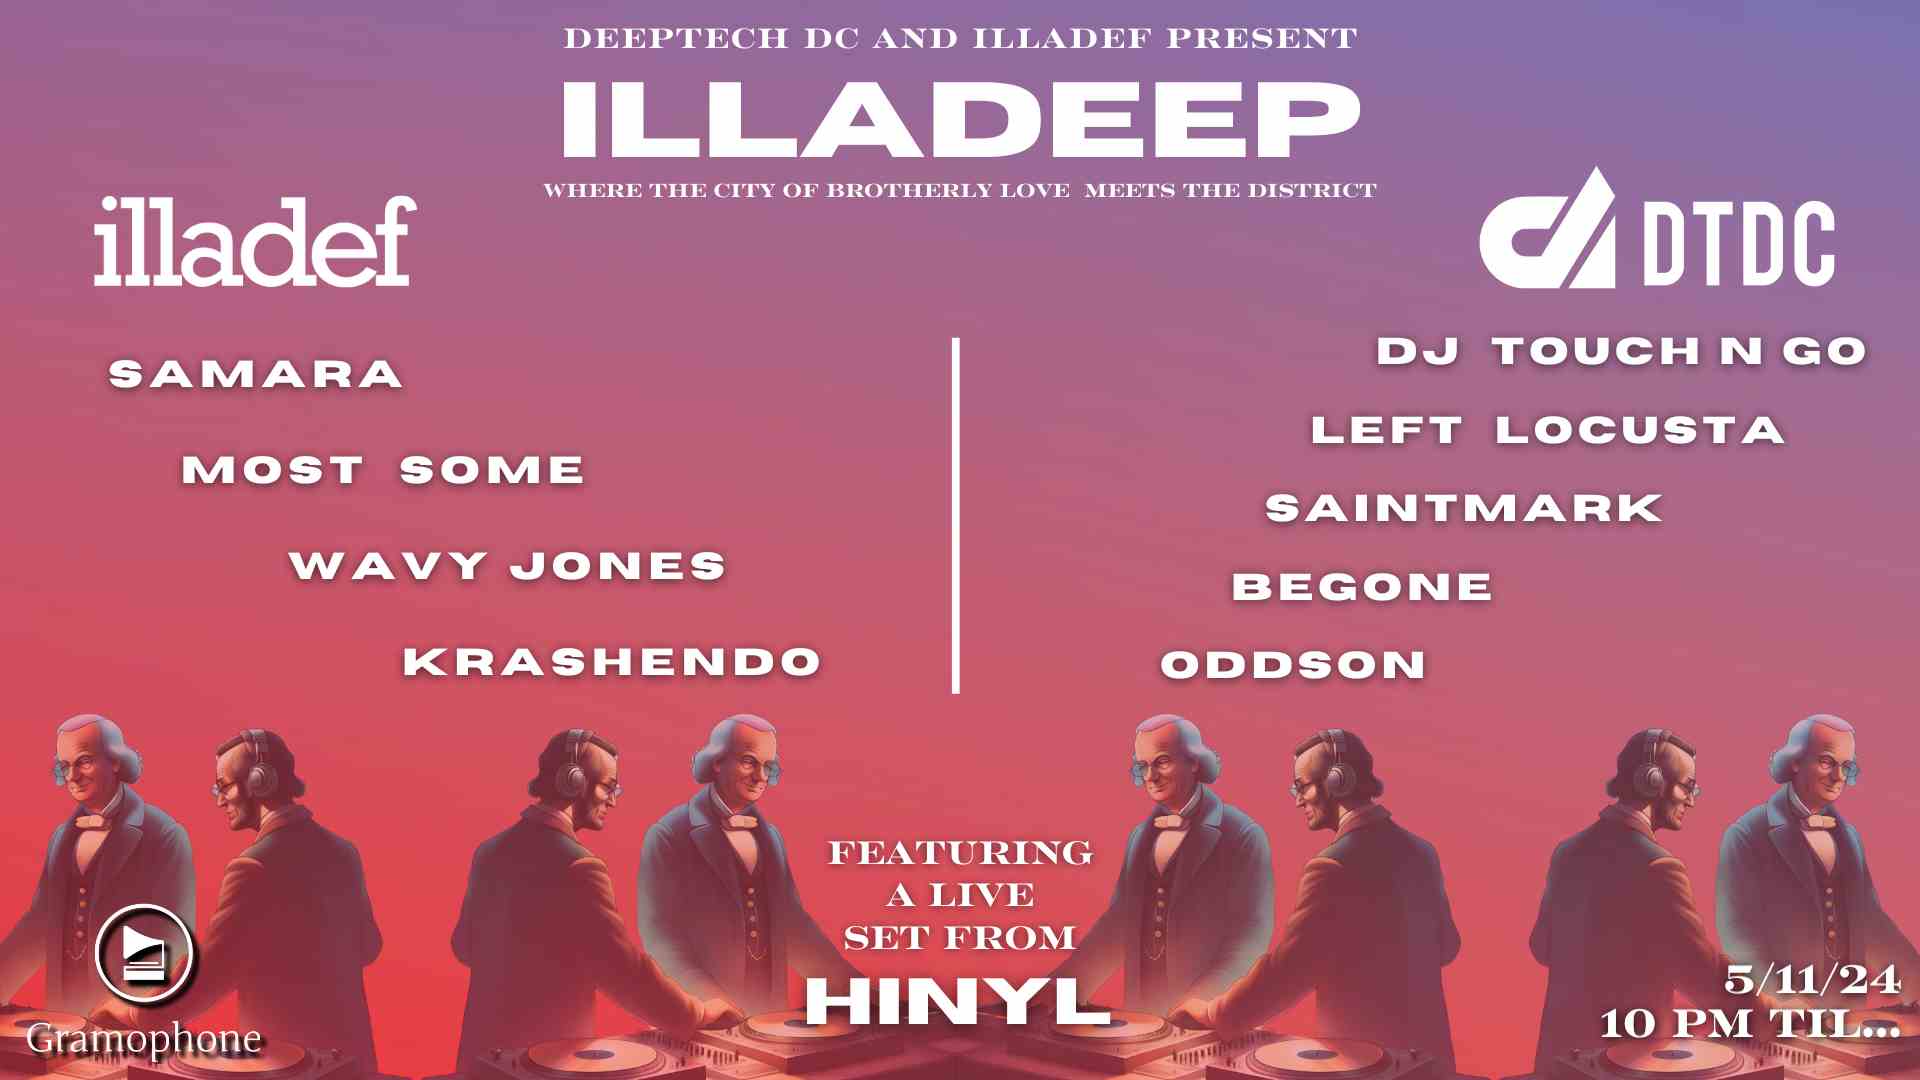 DEEPTECH DC & ILLADEF PRESENT: ILLADEEP event flyer